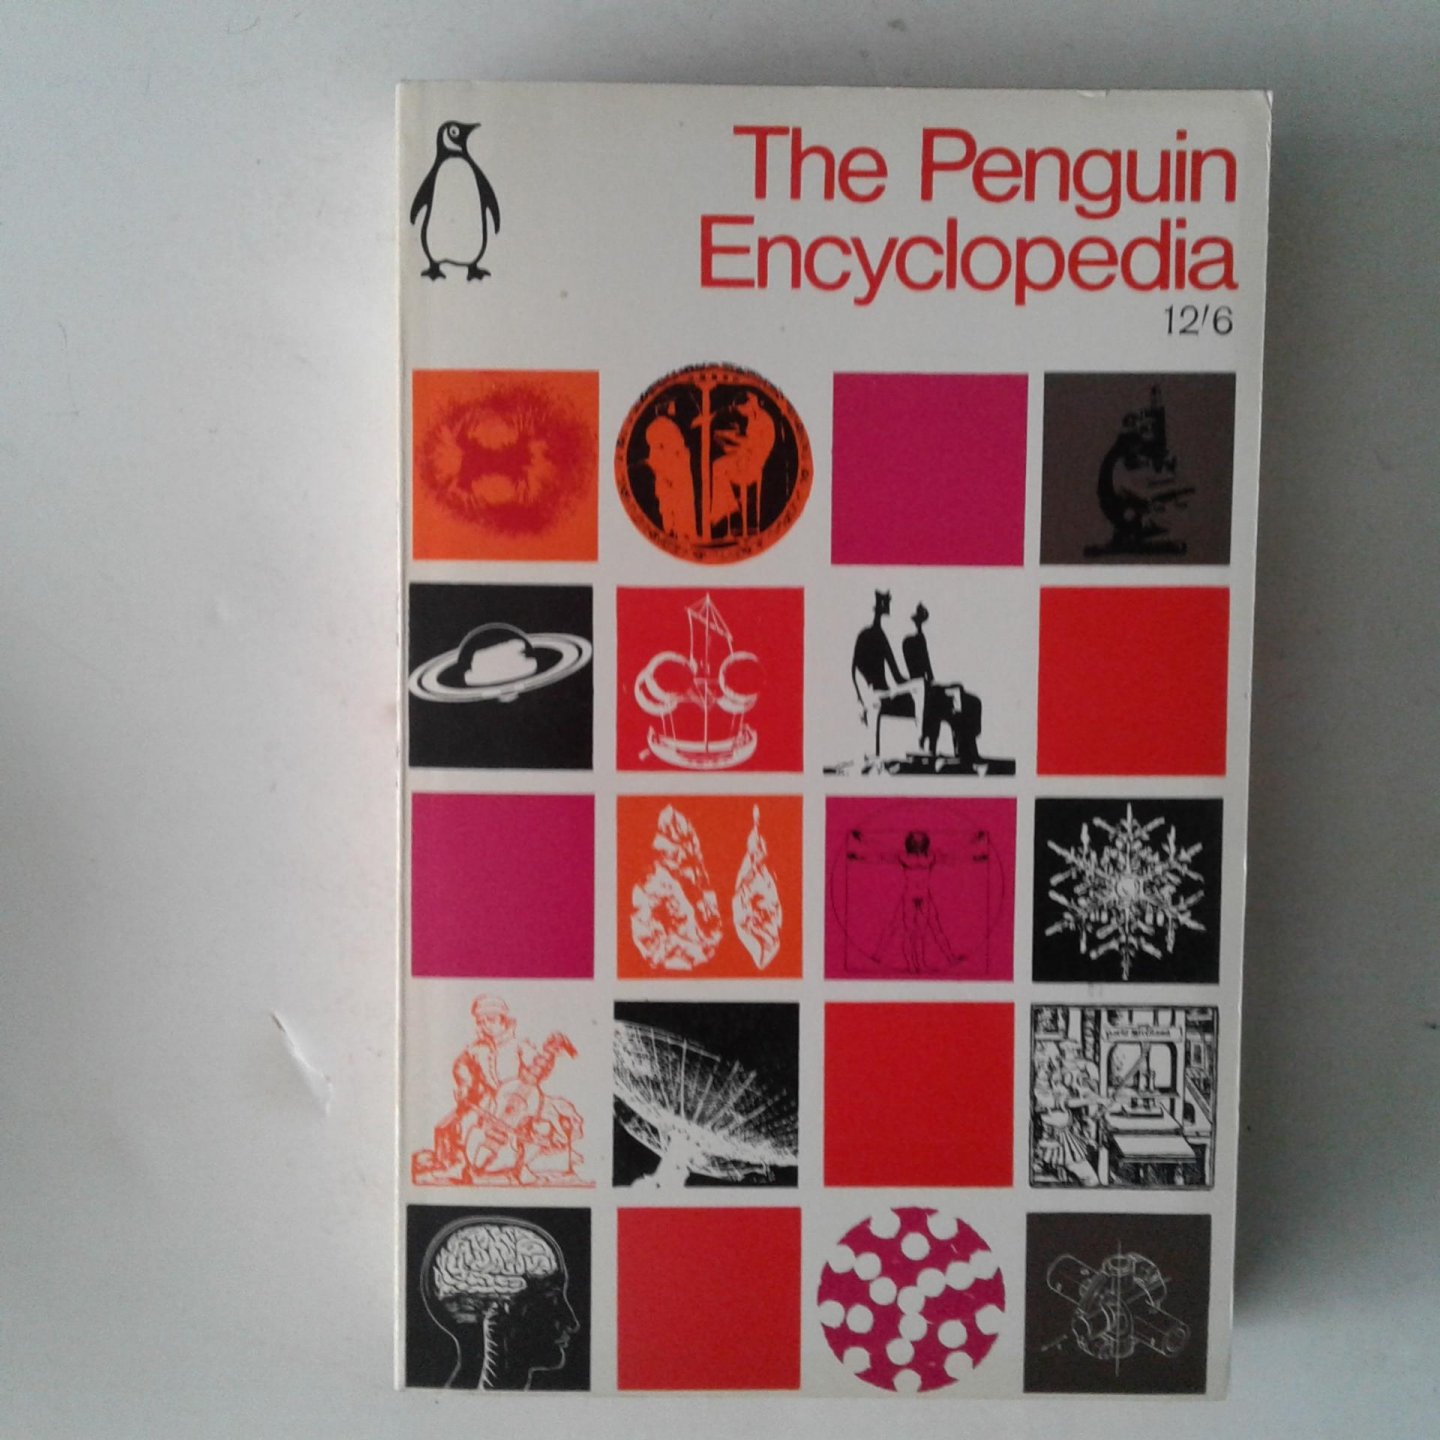 Summerscale, Sir John - The Penguin Encyclopedia